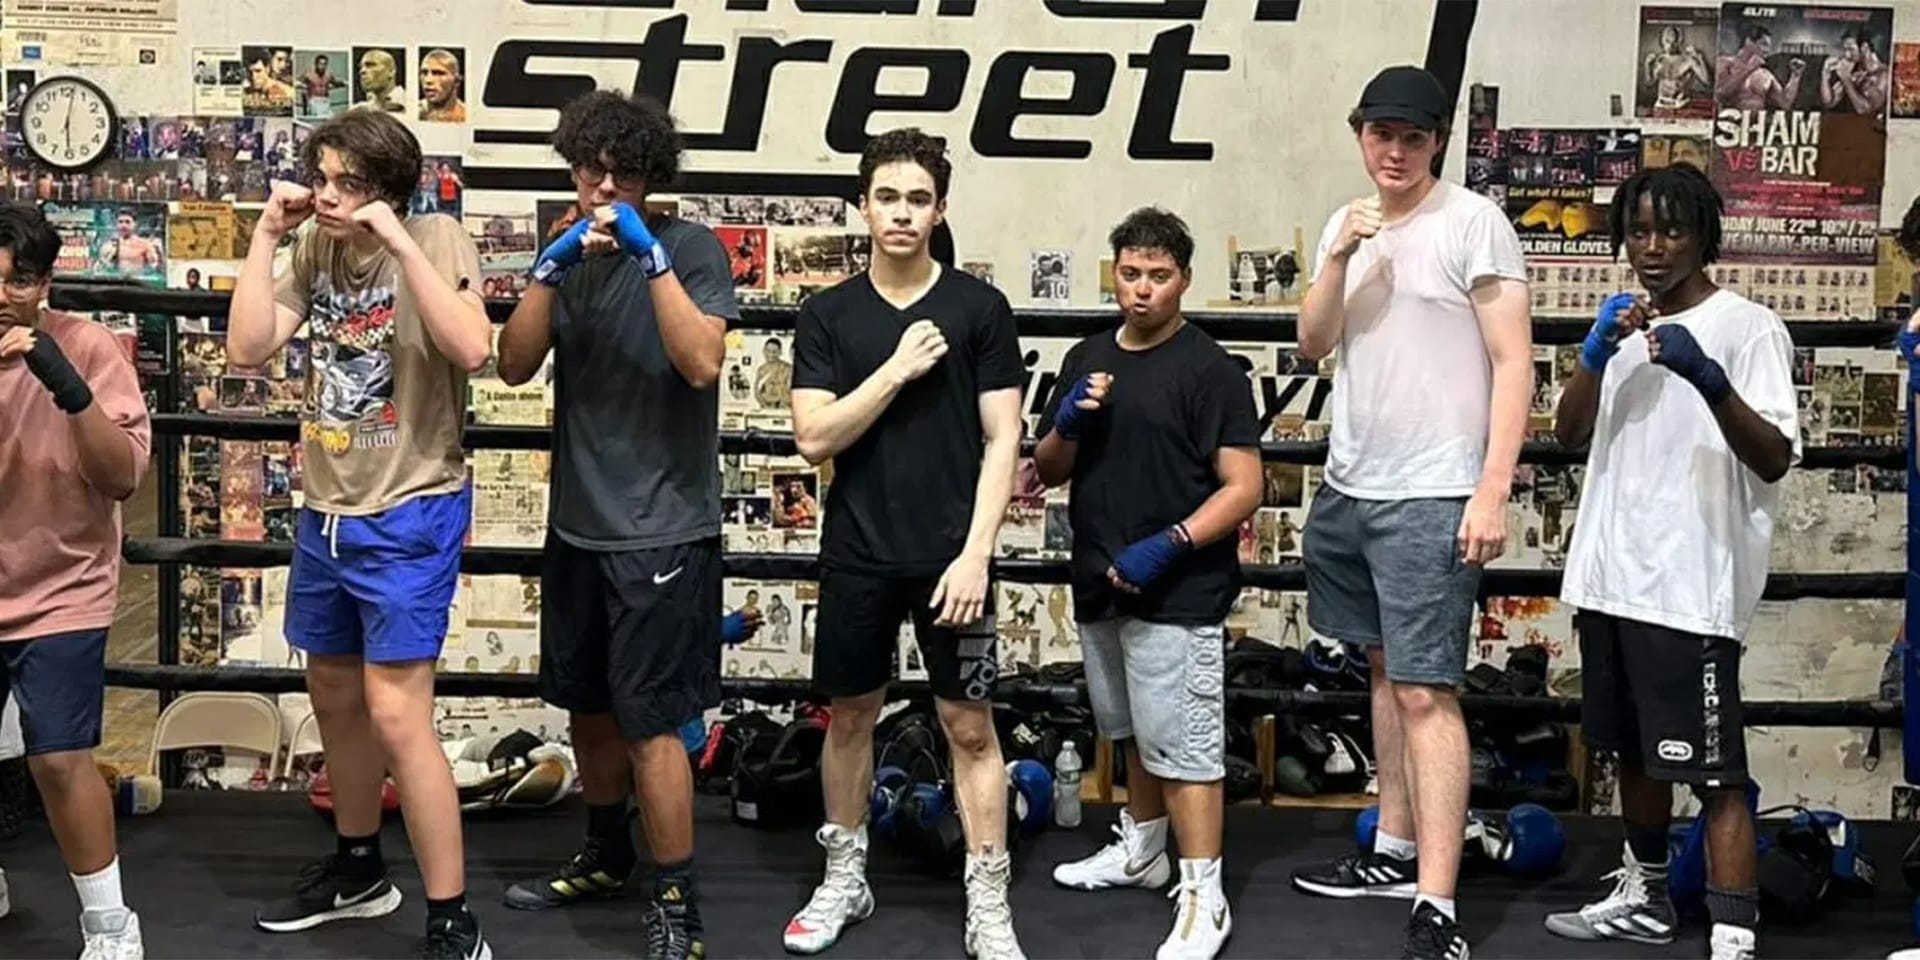 kids training box class at Church Street Boxing Gym